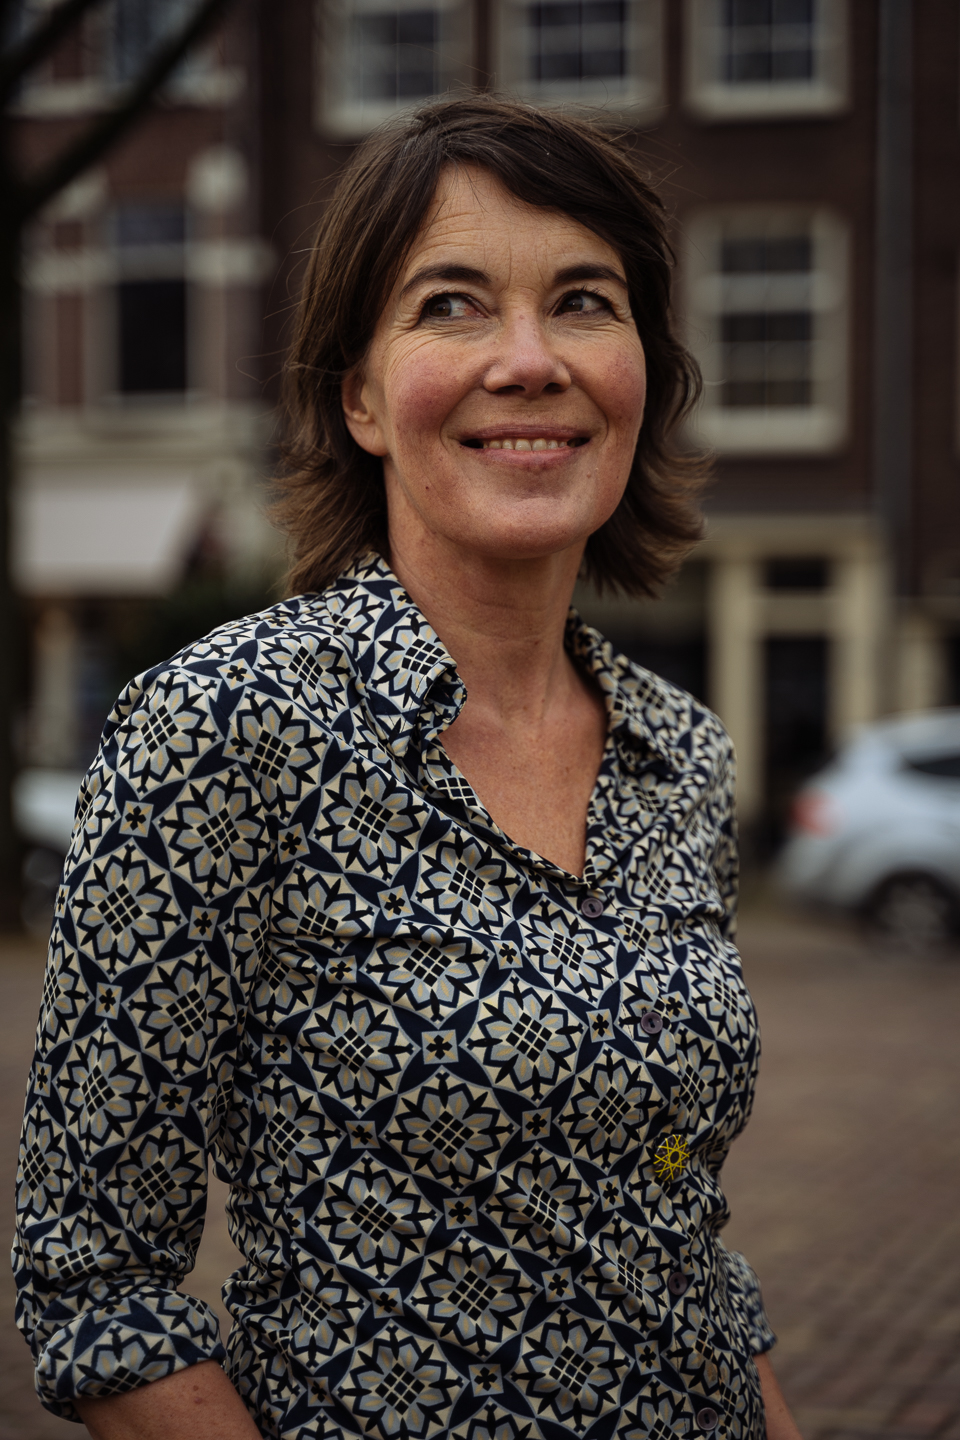 Chantal van Binsbergen